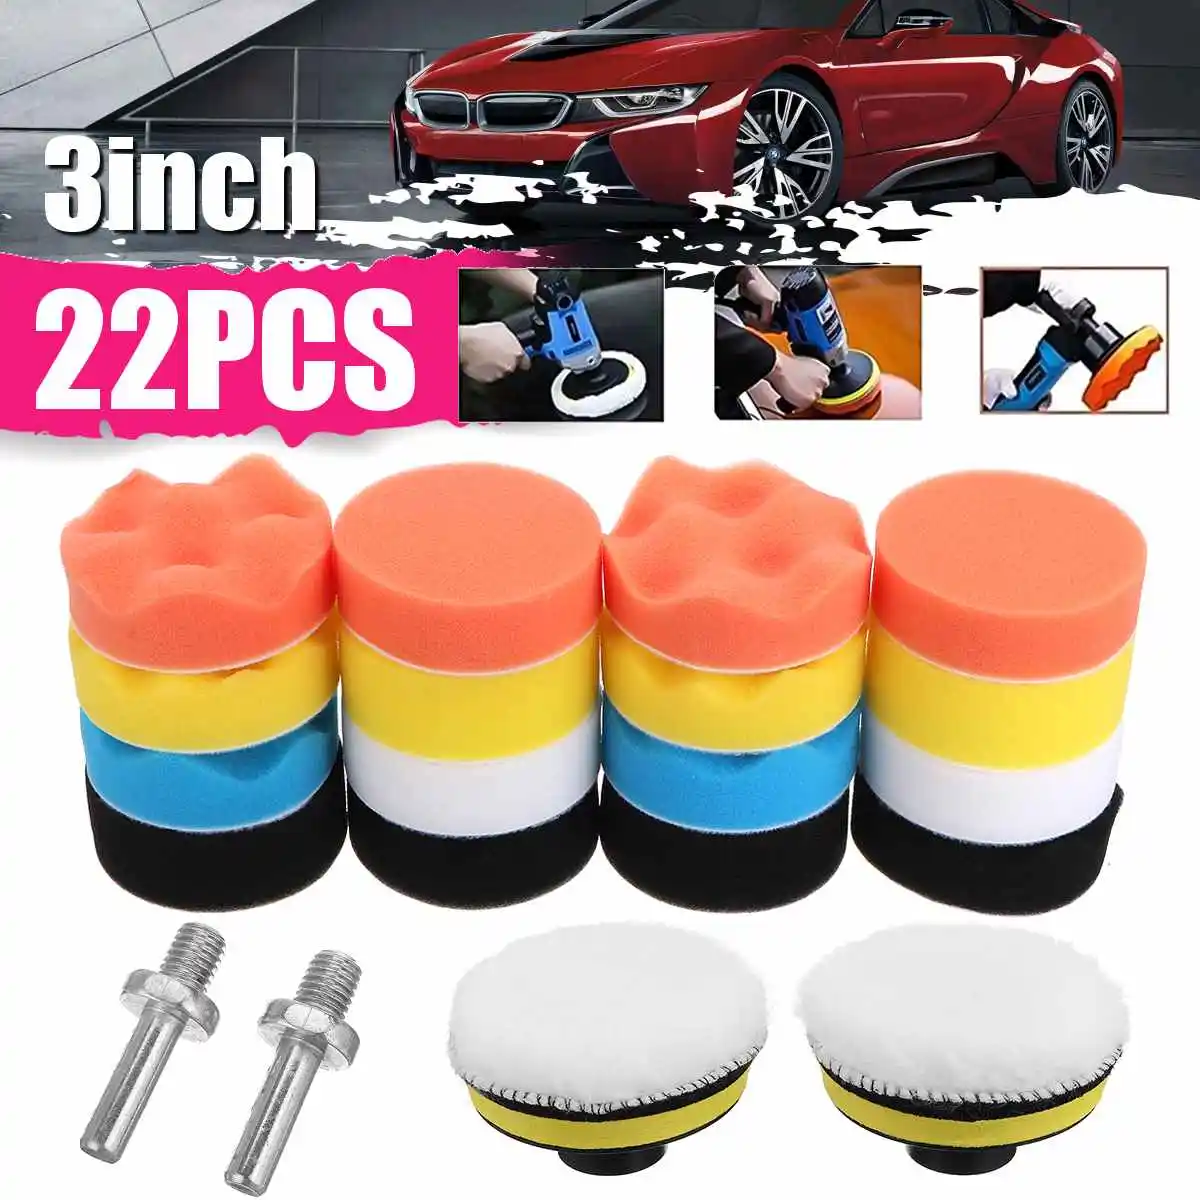 

22Pcs Car Polishing Waxing Sponge Wheel Polishing Disc Kit Set 3inch M10 Sponge Disc Pad For Car Polisher Auto Waxing Seal Tool